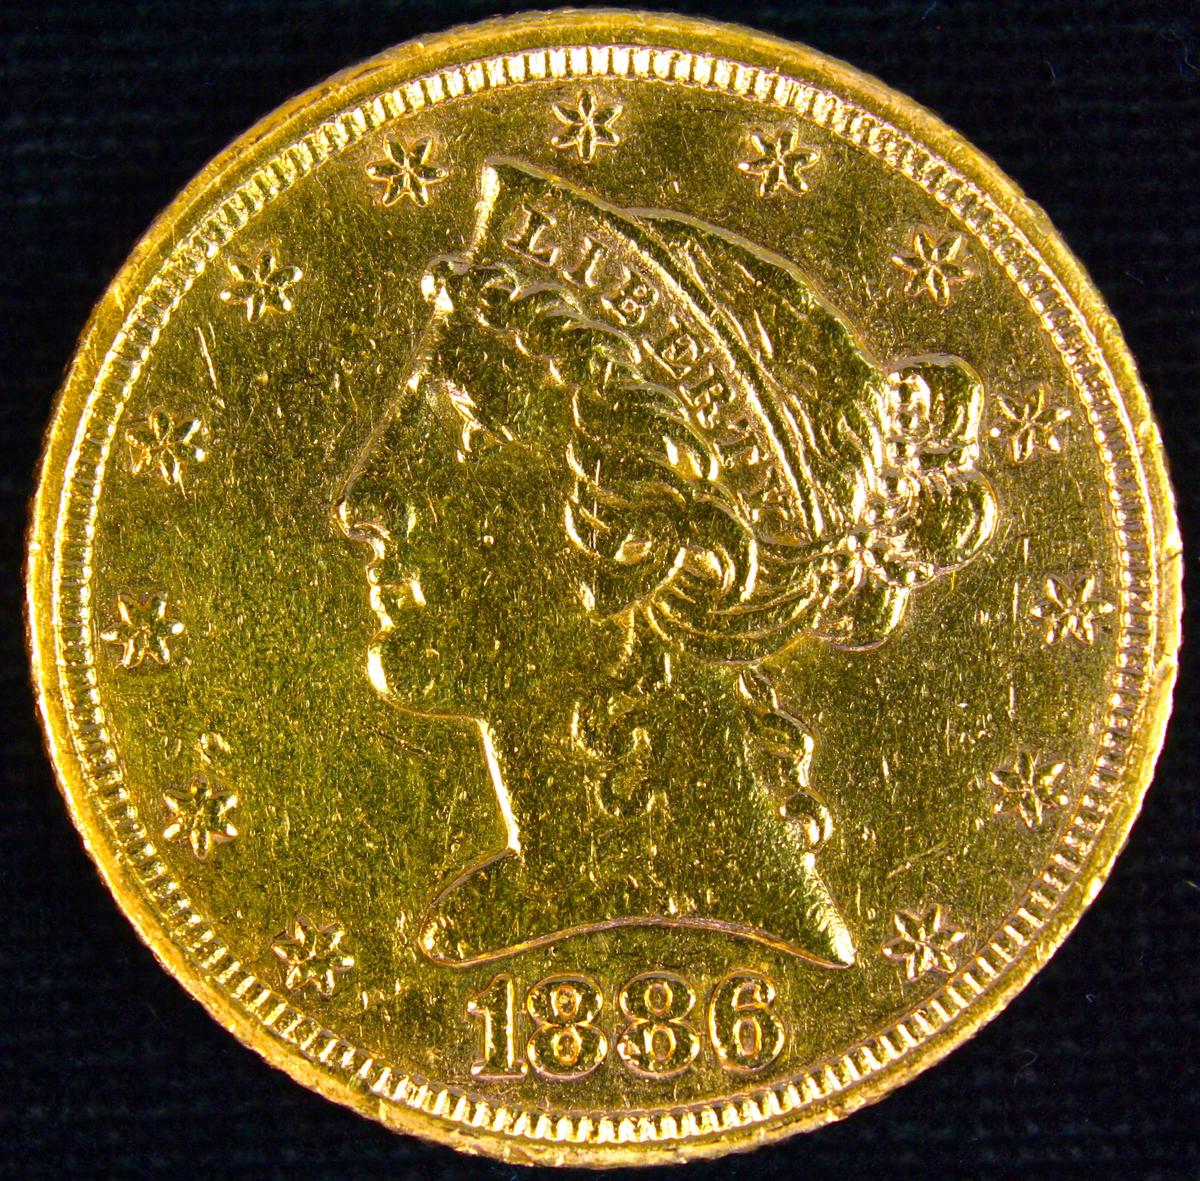 1886 U.S. $5 Liberty head gold coin